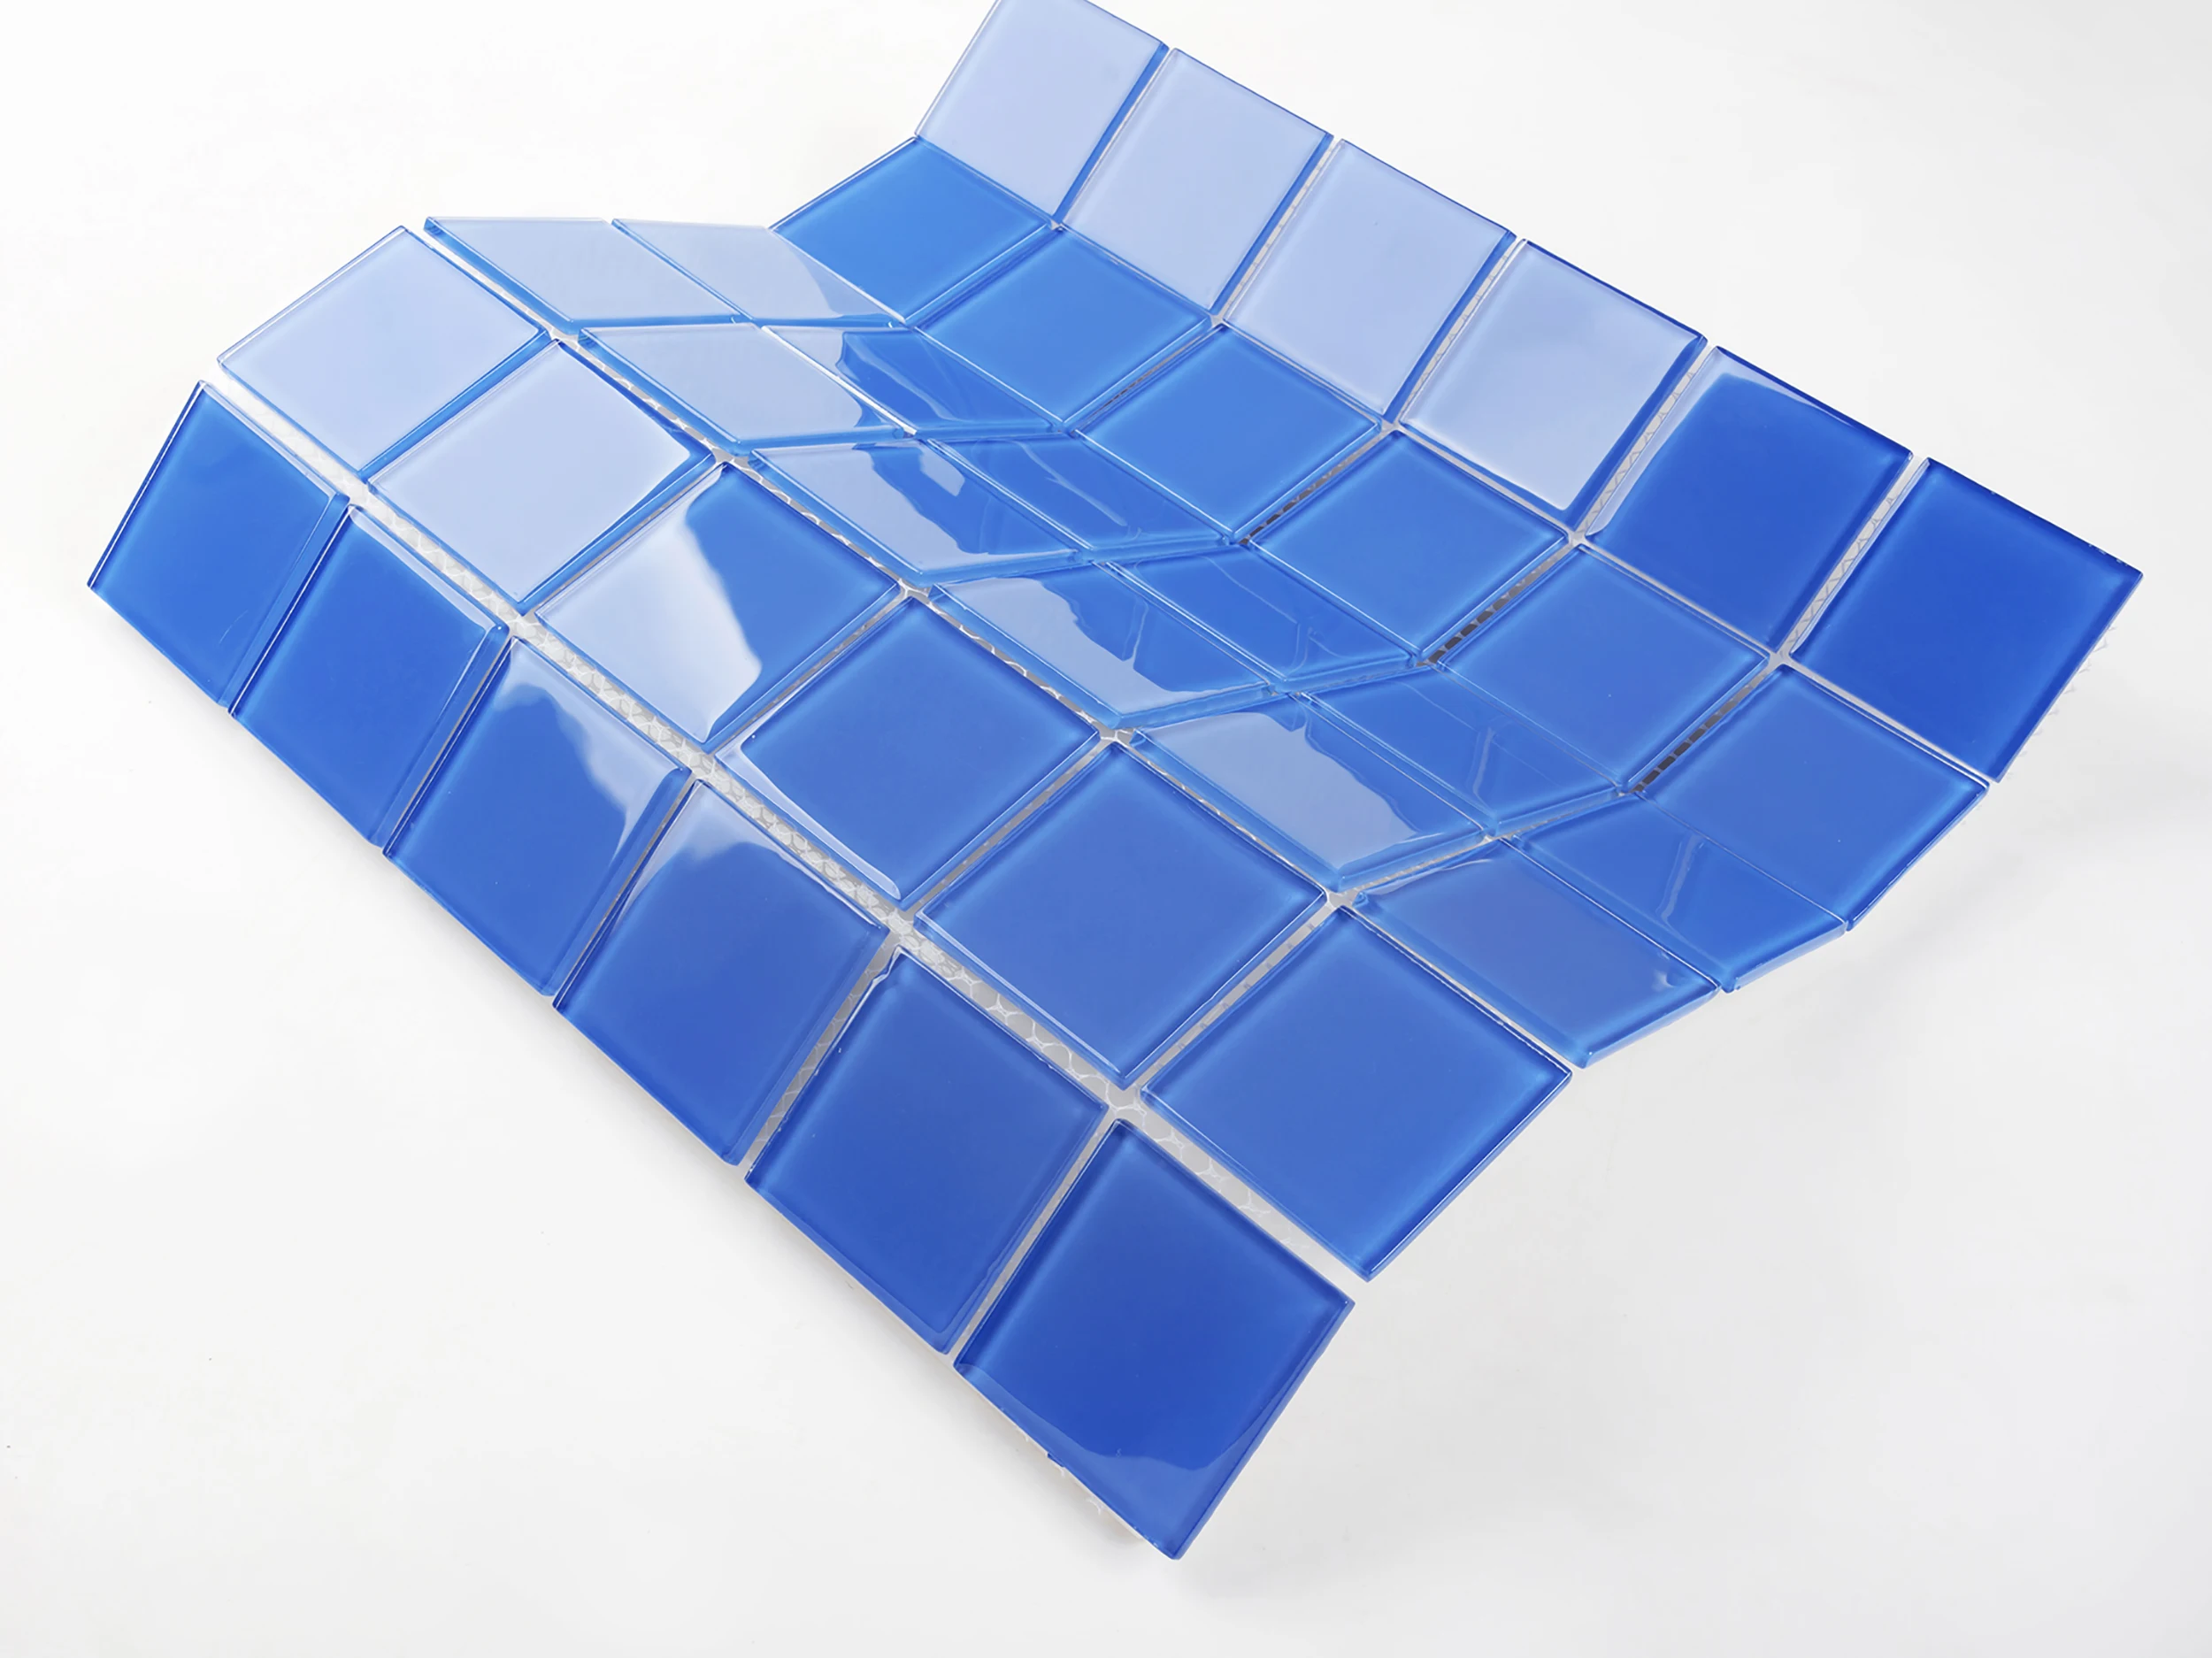 Wholesale China manufacturer 48x48 mm Decorative backsplash kitchen Blue Indoor Fiberglass Swimming Pool mosaic tiles